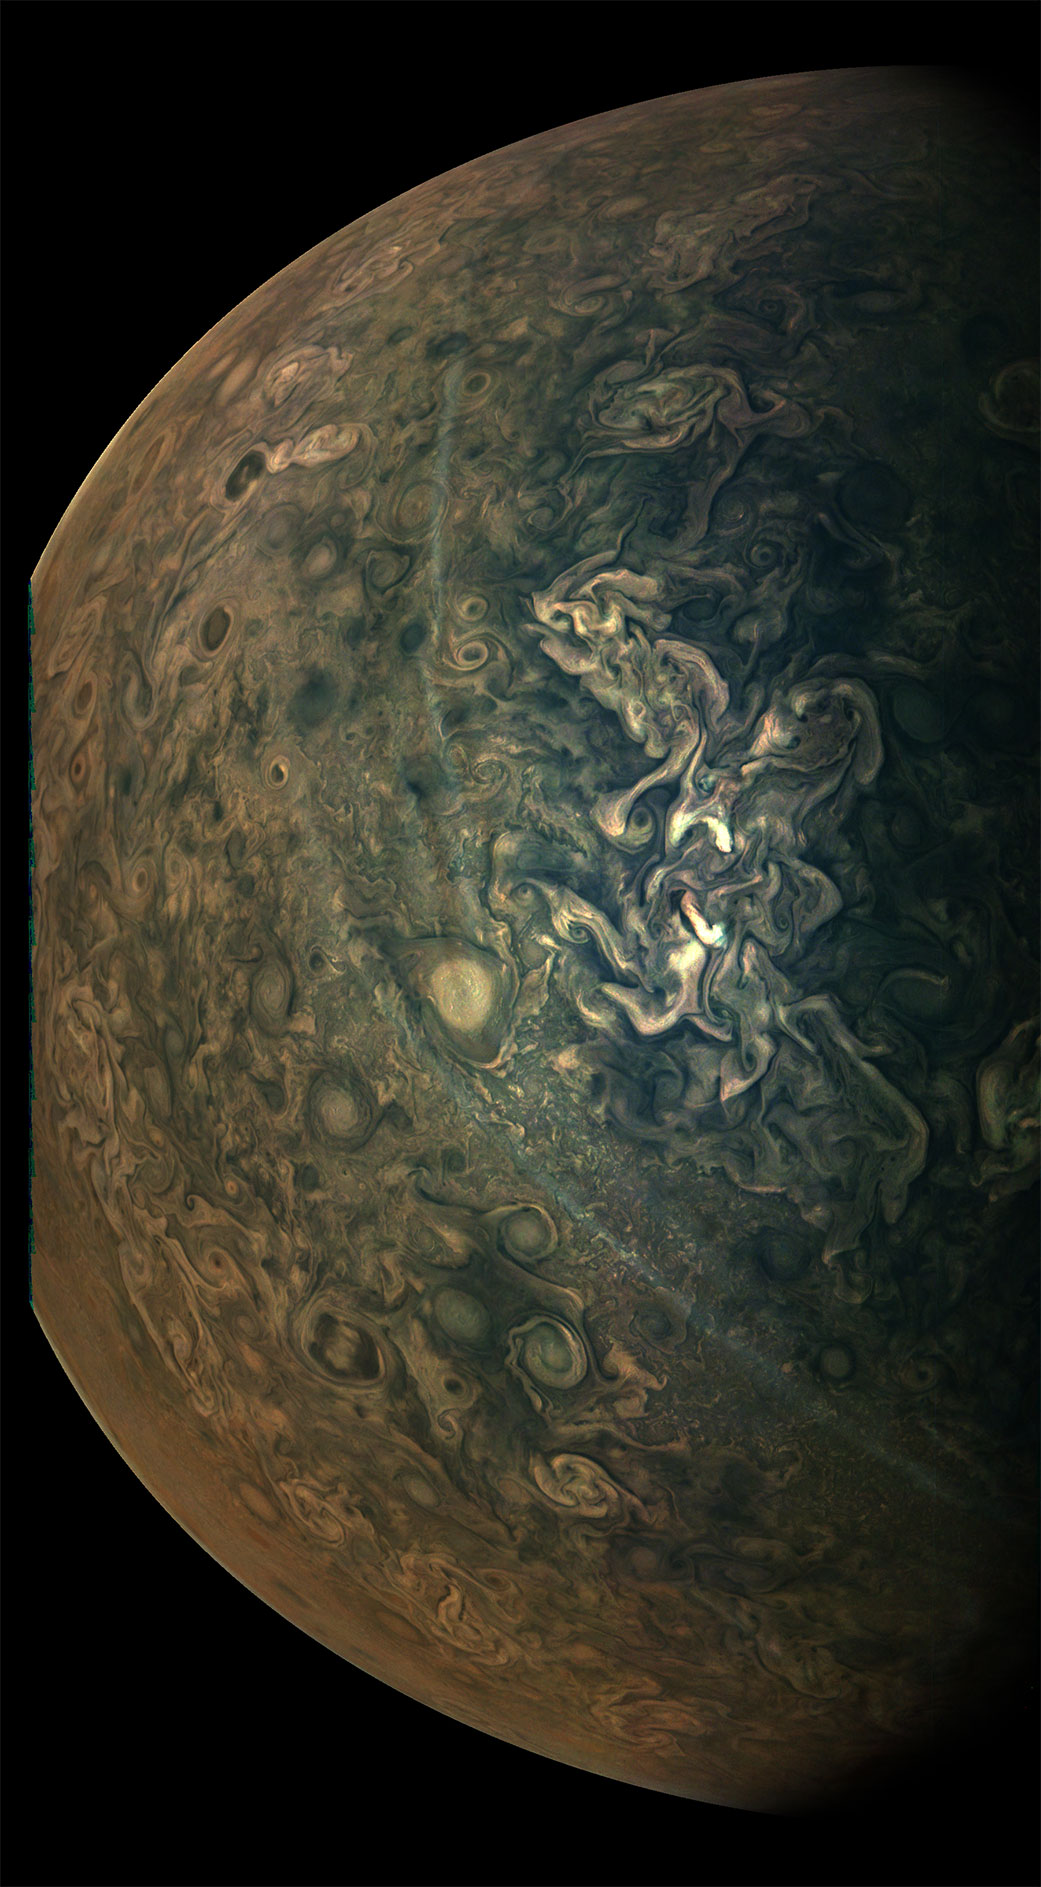 Planeten Jupiter dimma halvklotet